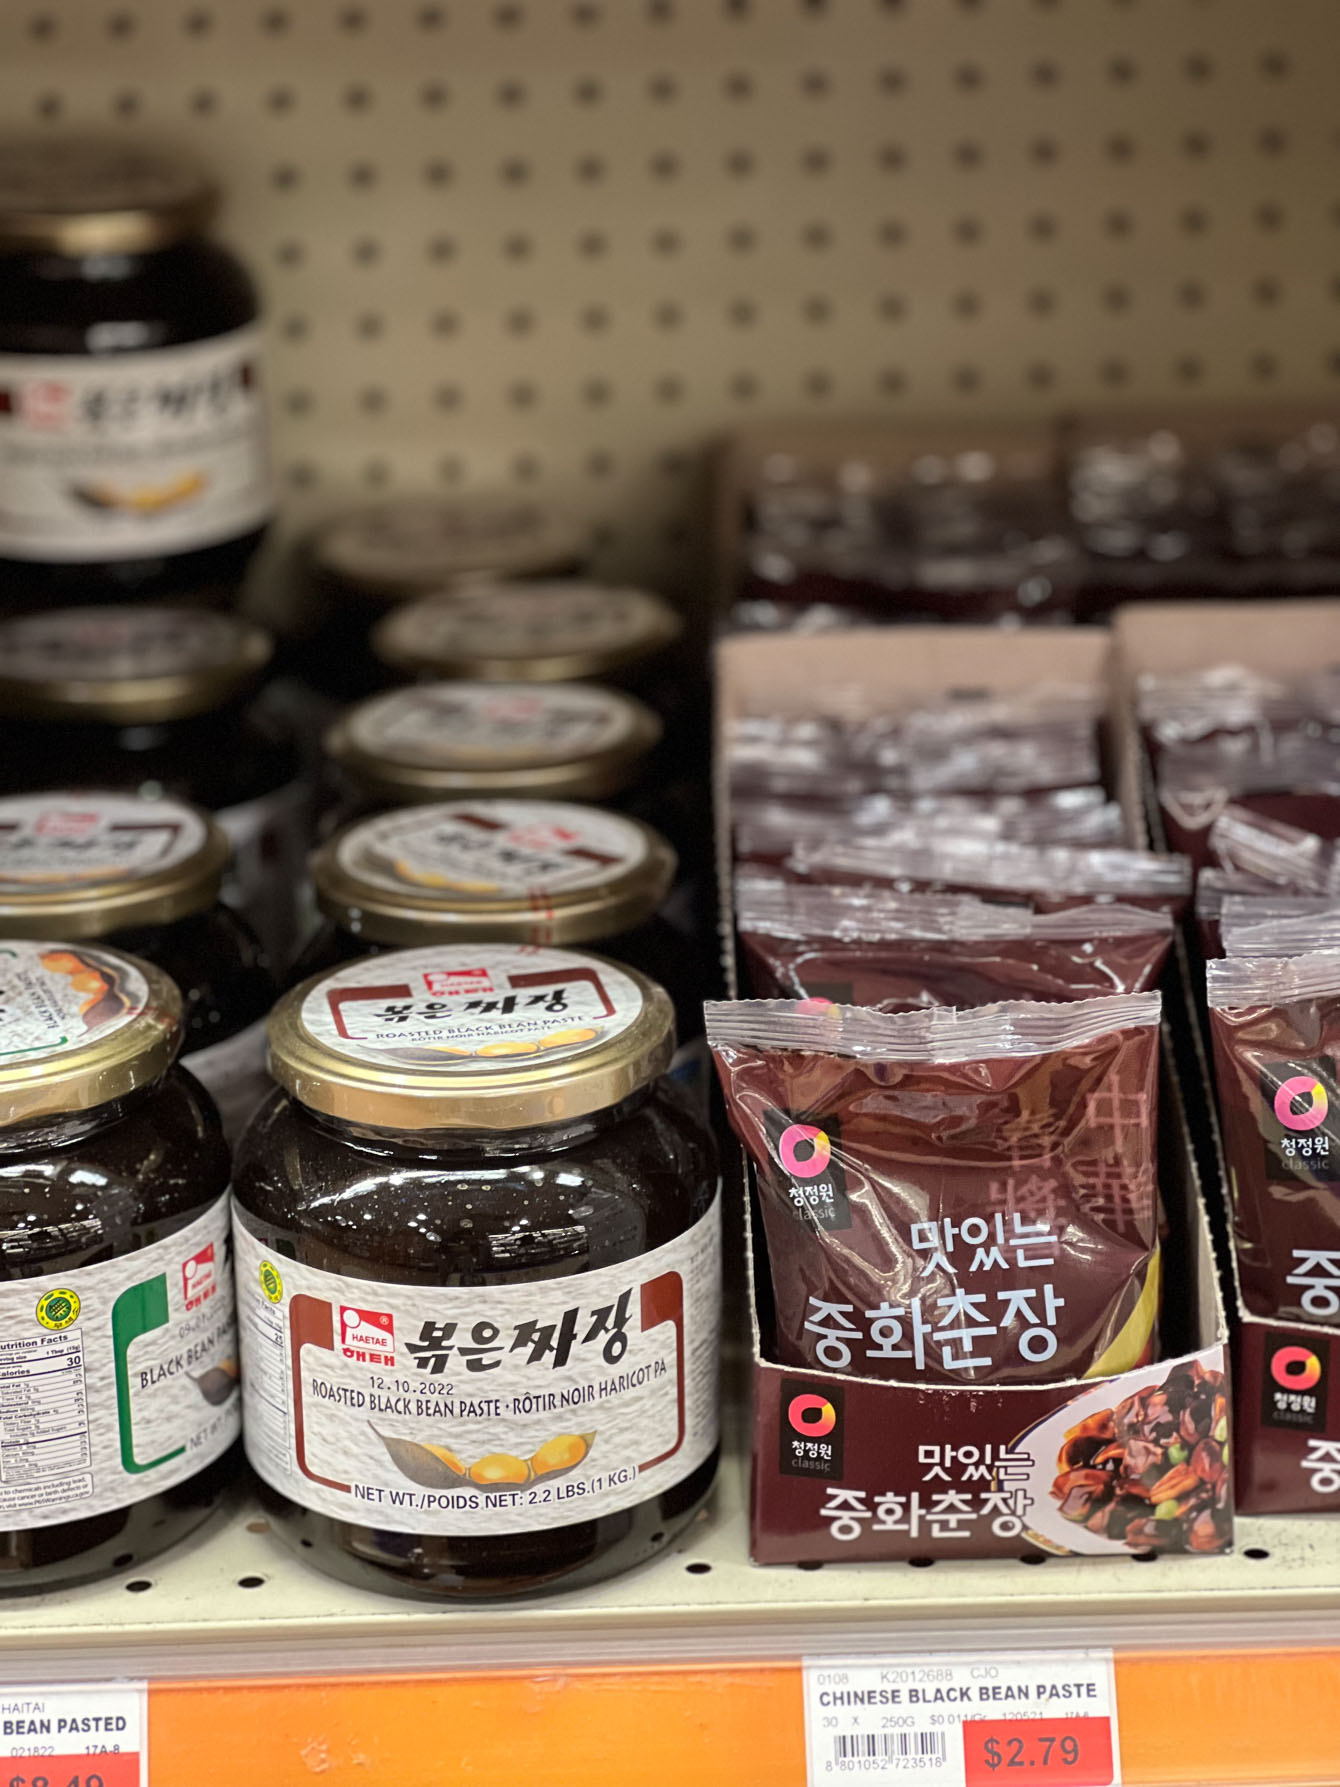 Korean black bean pastes in Korean condiment section of the store.